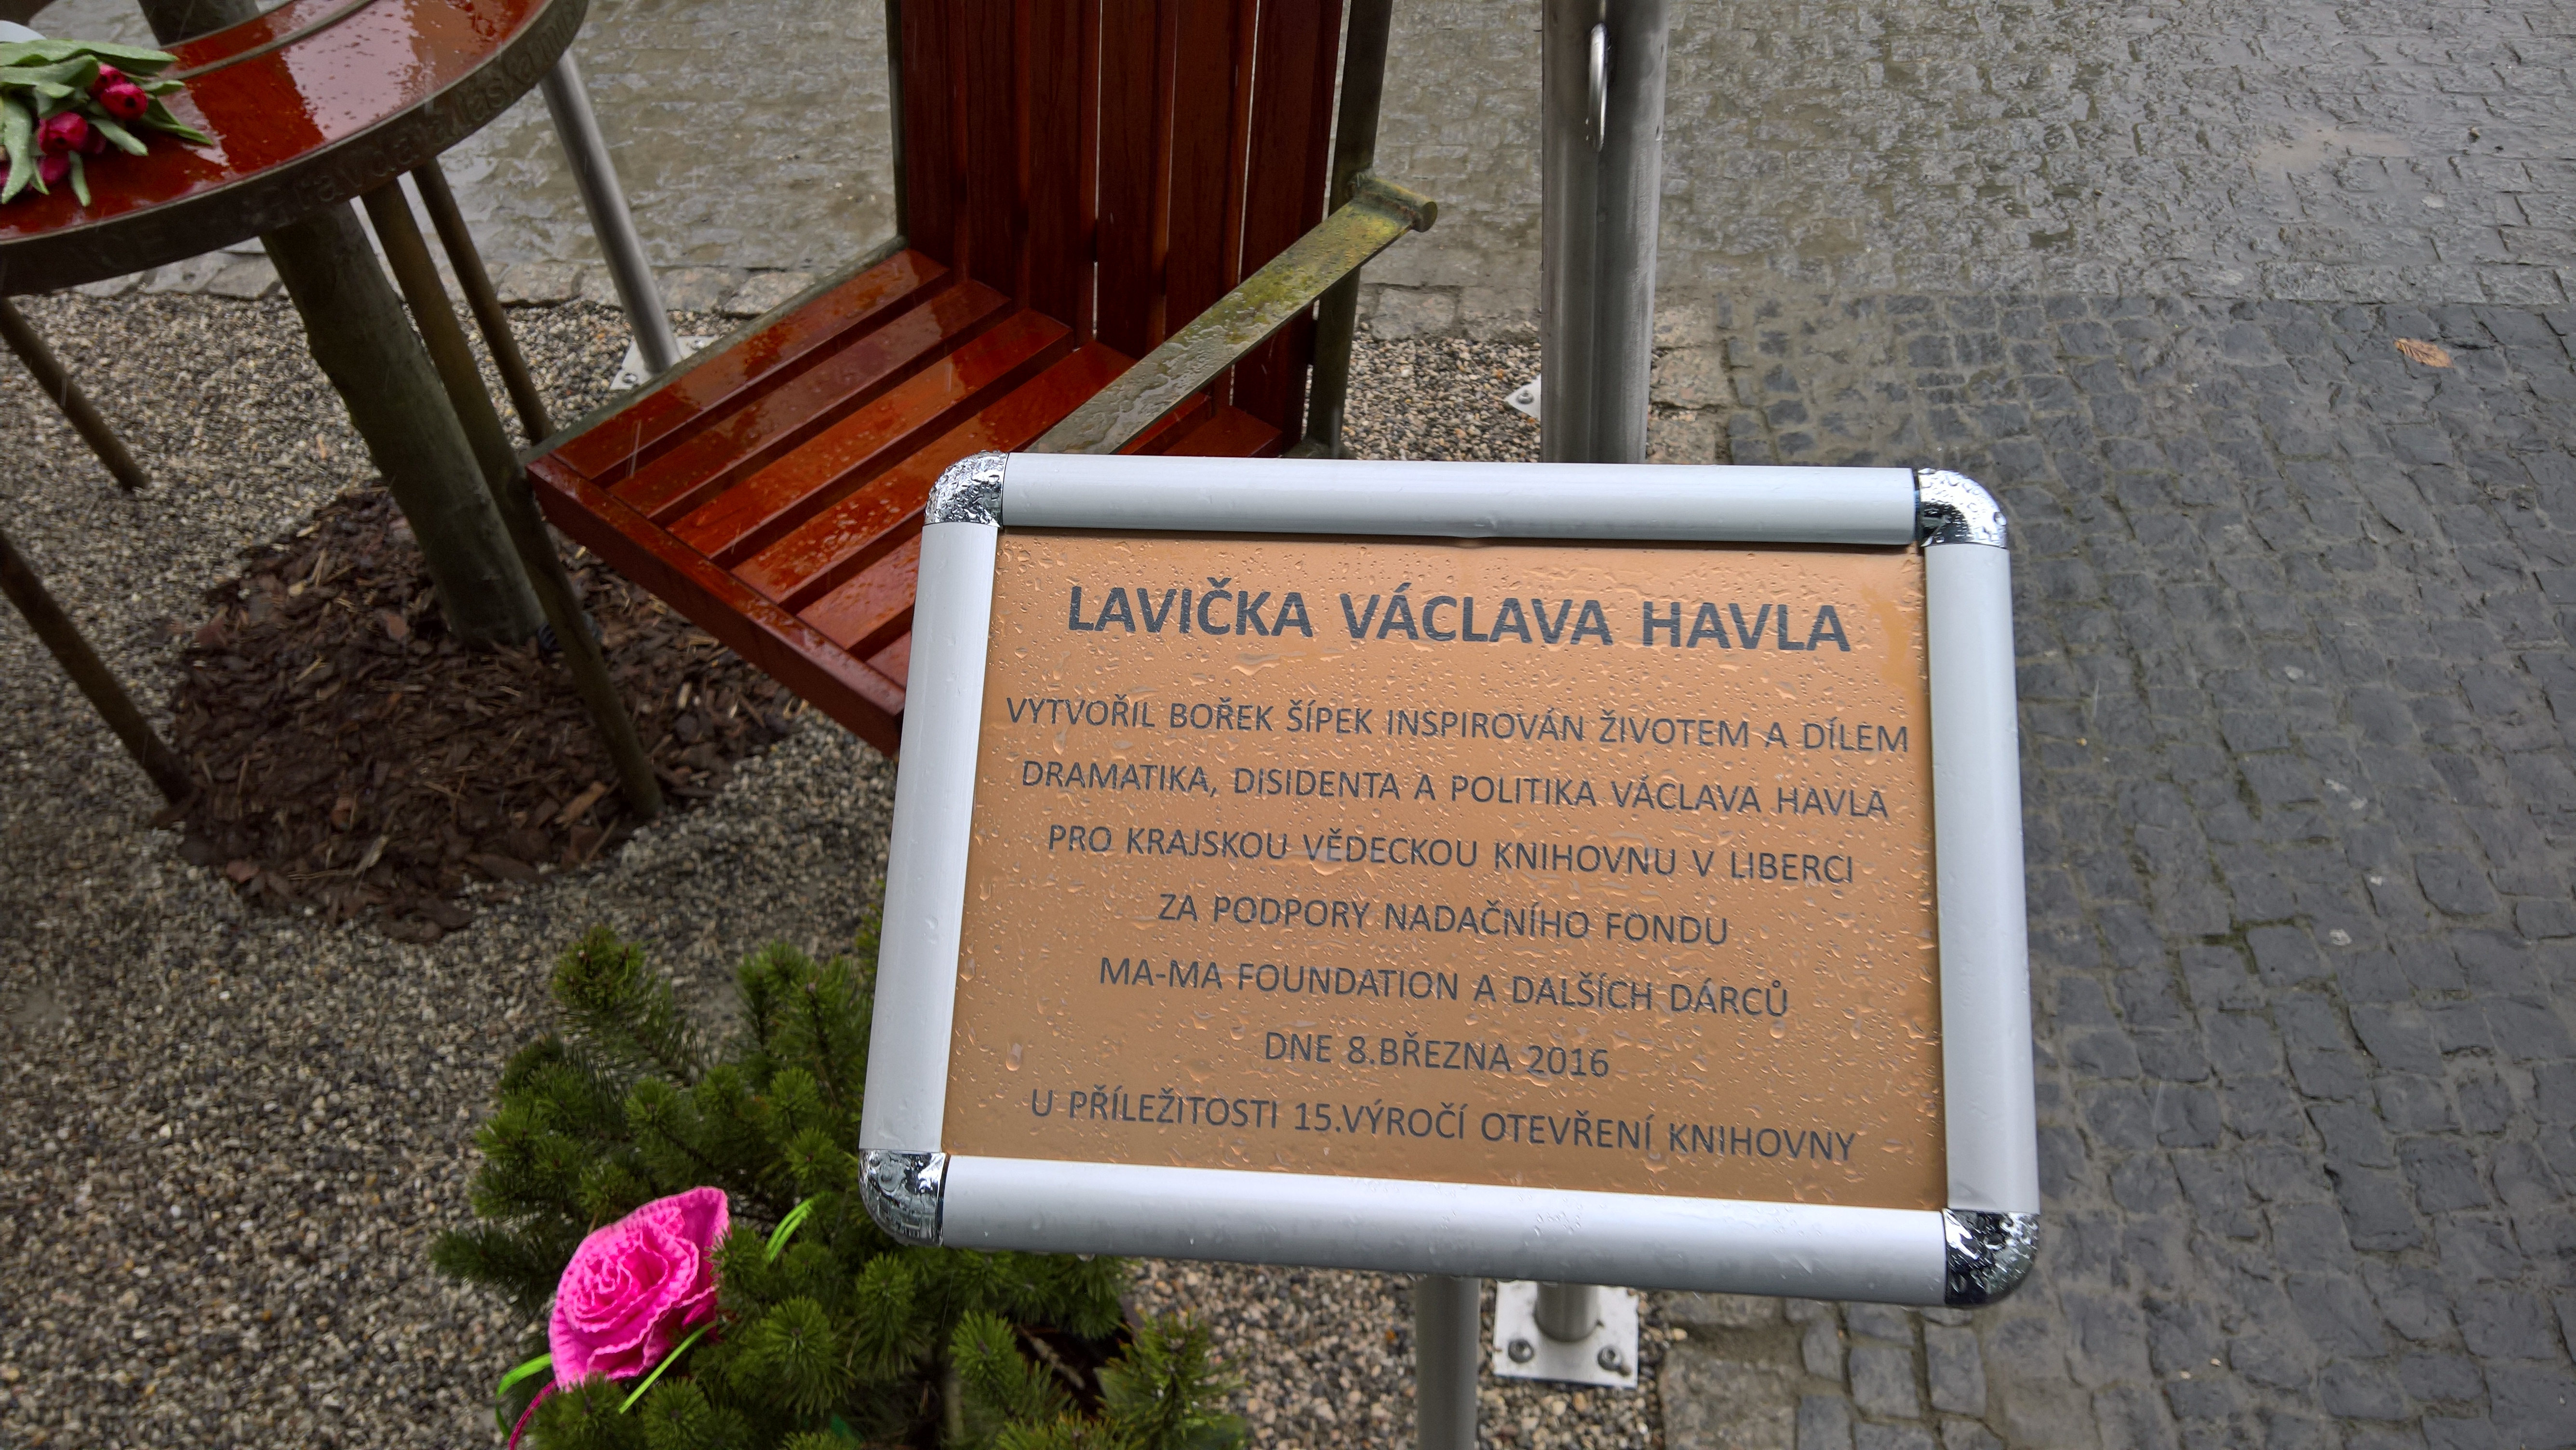 Lavička Václava Havla